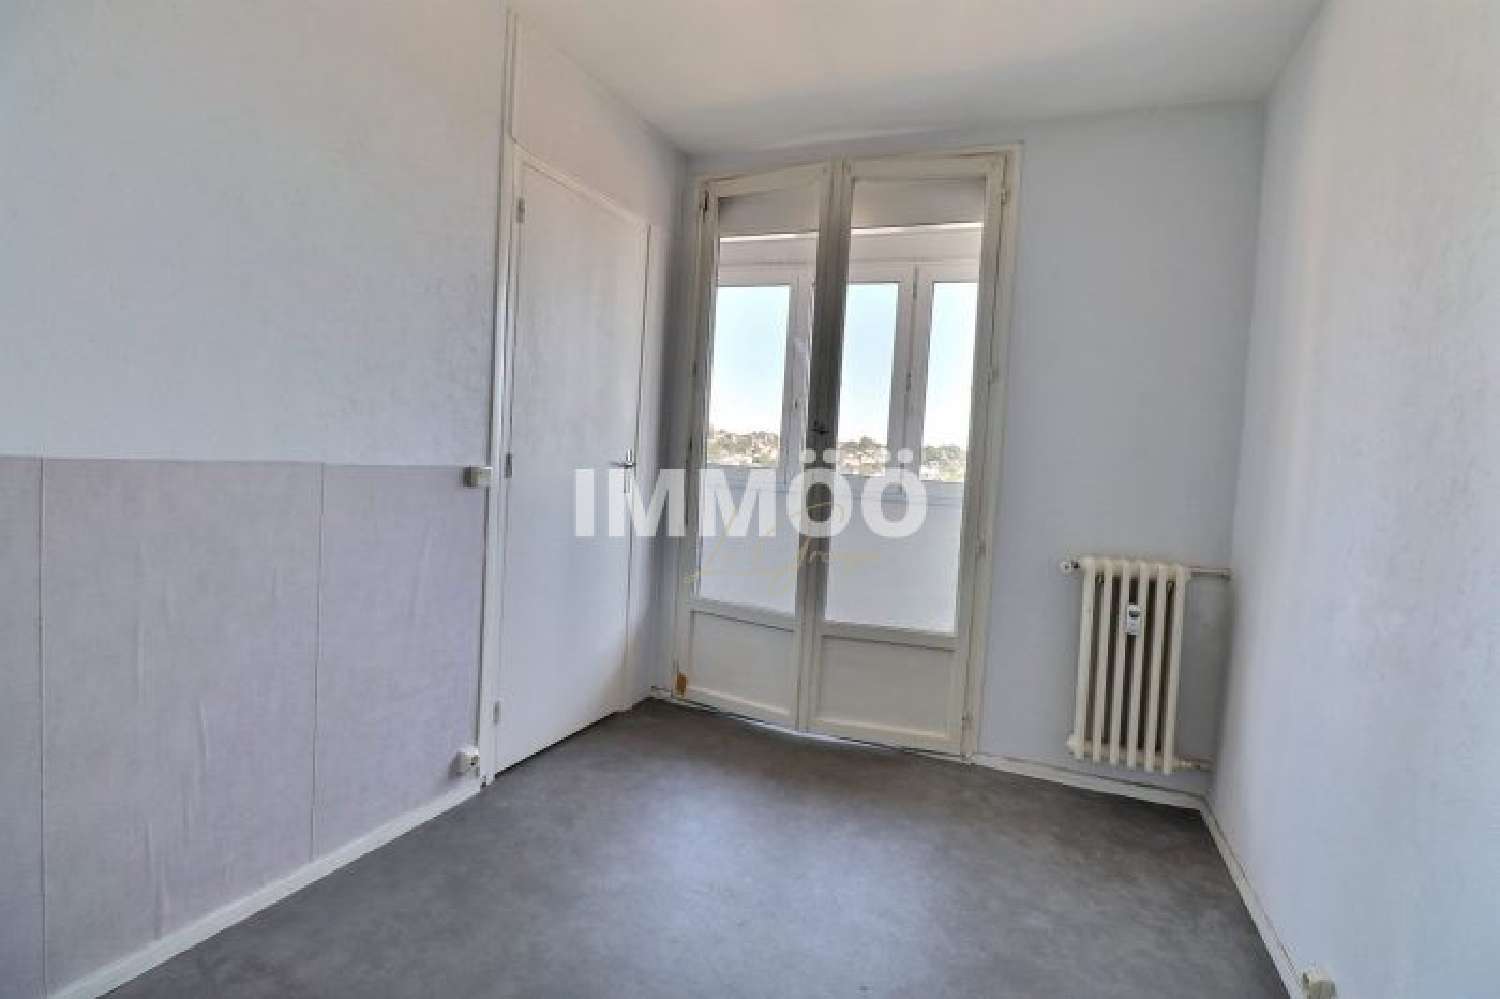  for sale apartment Bois-Guillaume Seine-Maritime 5